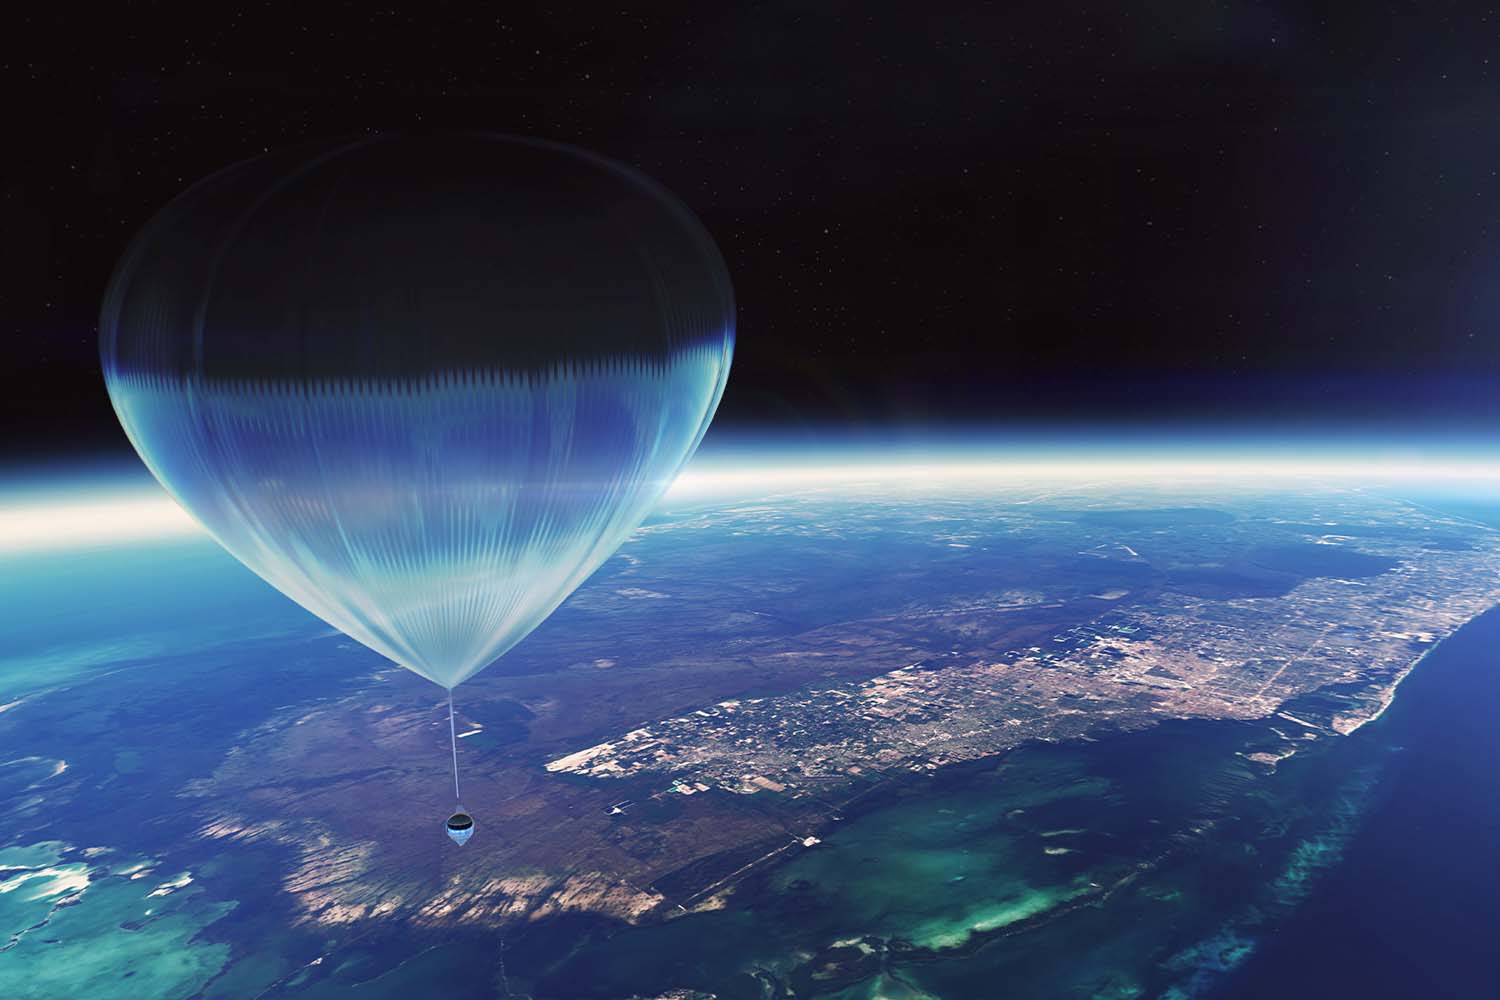 Space Perspective's Spaceship Neptune SpaceBalloon